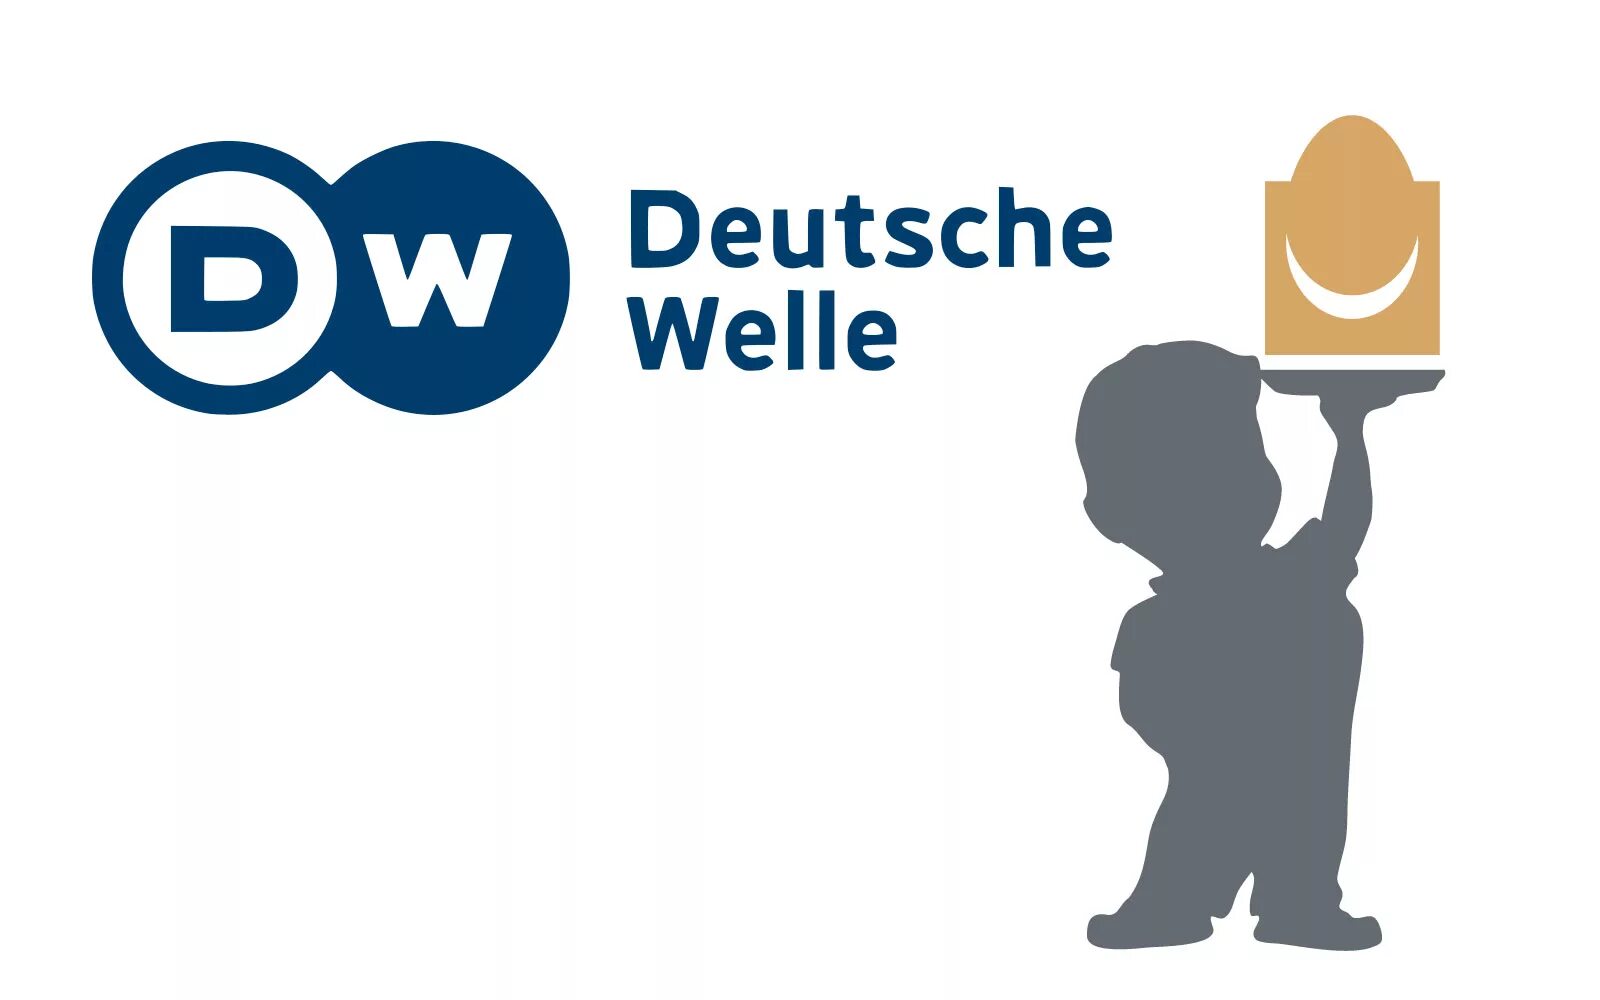 Дойче велле на русском ютуб. DW Телеканал. DW логотип. Deutsche Welle Телеканал. Дойче велле эмблема.